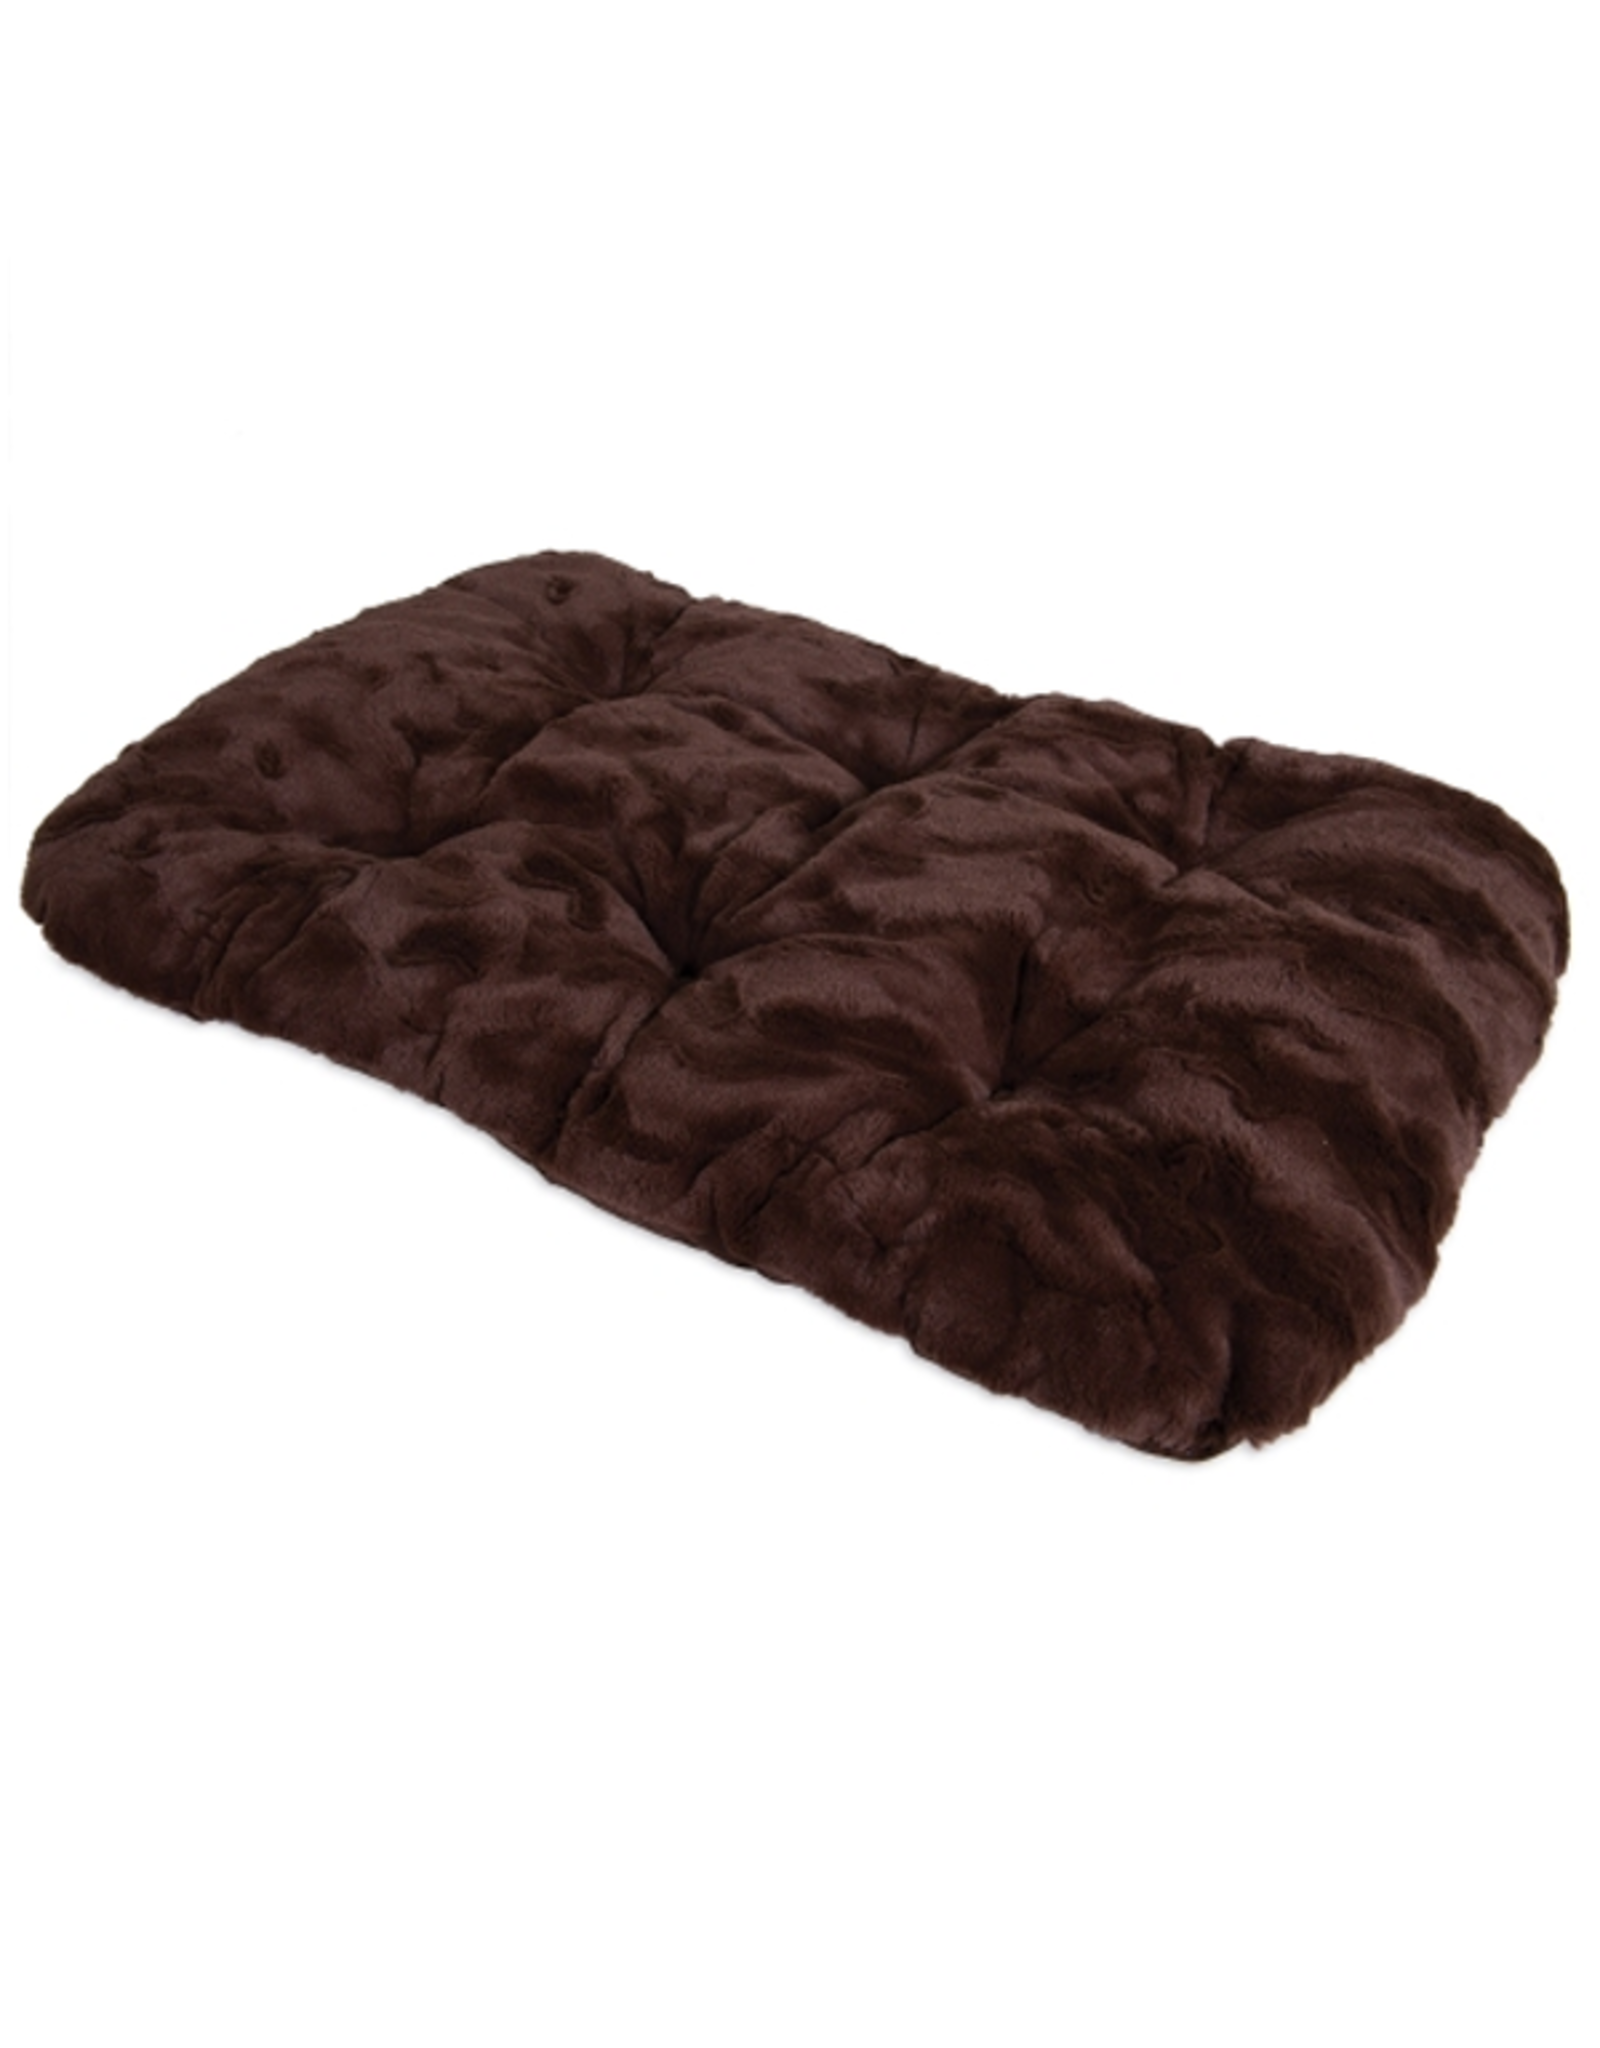 Precision Precision 1000 SnooZZy Cozy Comforter 17.5 x 11.5" Brown